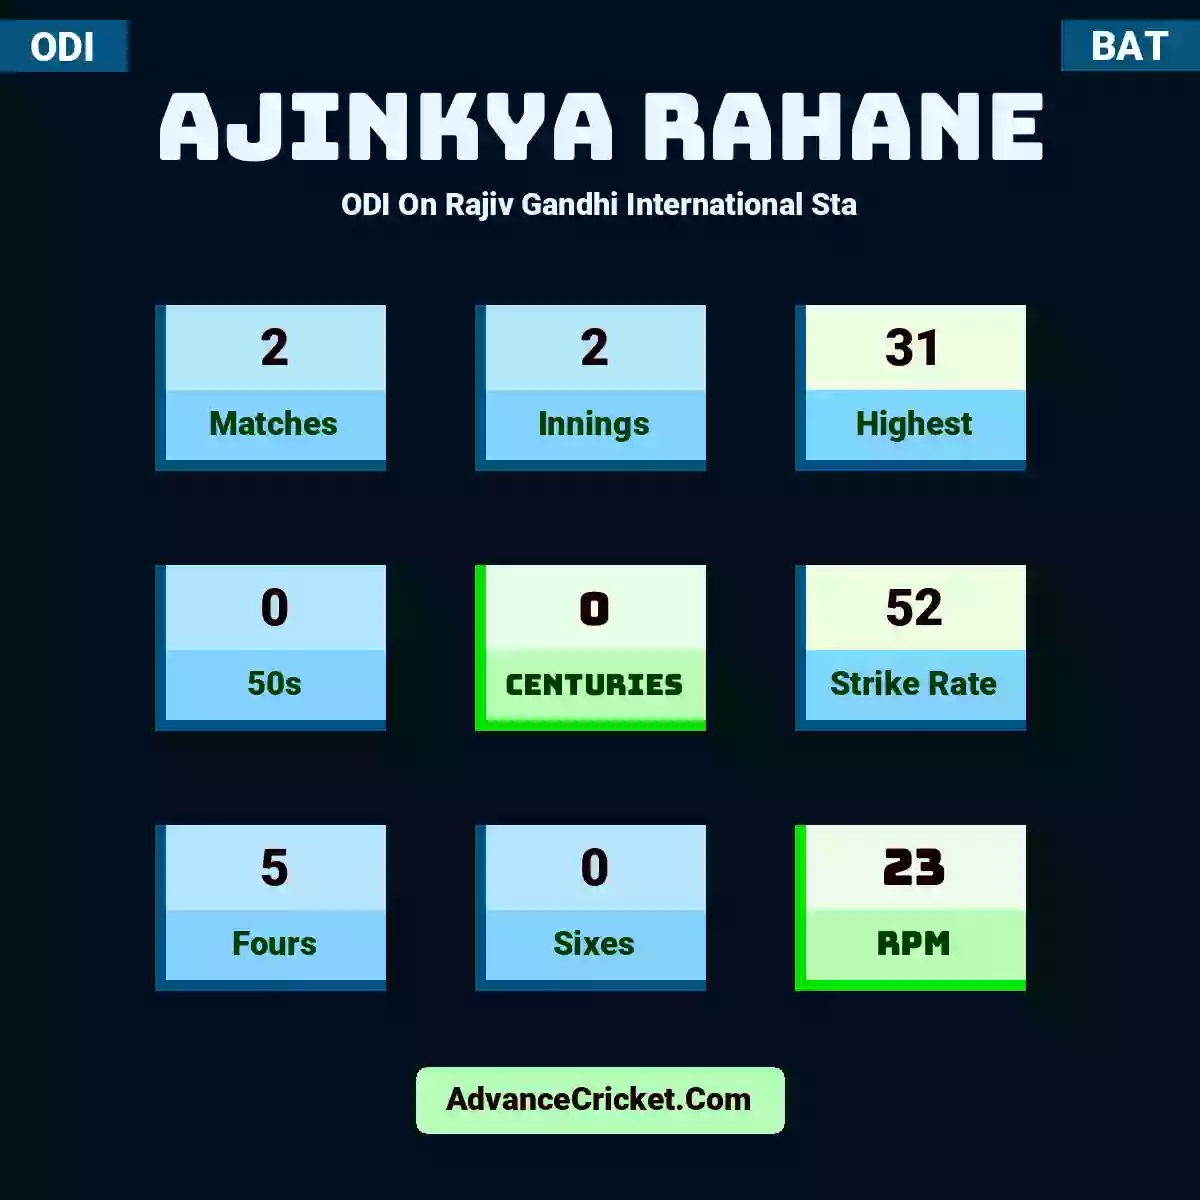 Ajinkya Rahane ODI  On Rajiv Gandhi International Sta, Ajinkya Rahane played 2 matches, scored 31 runs as highest, 0 half-centuries, and 0 centuries, with a strike rate of 52. A.Rahane hit 5 fours and 0 sixes, with an RPM of 23.